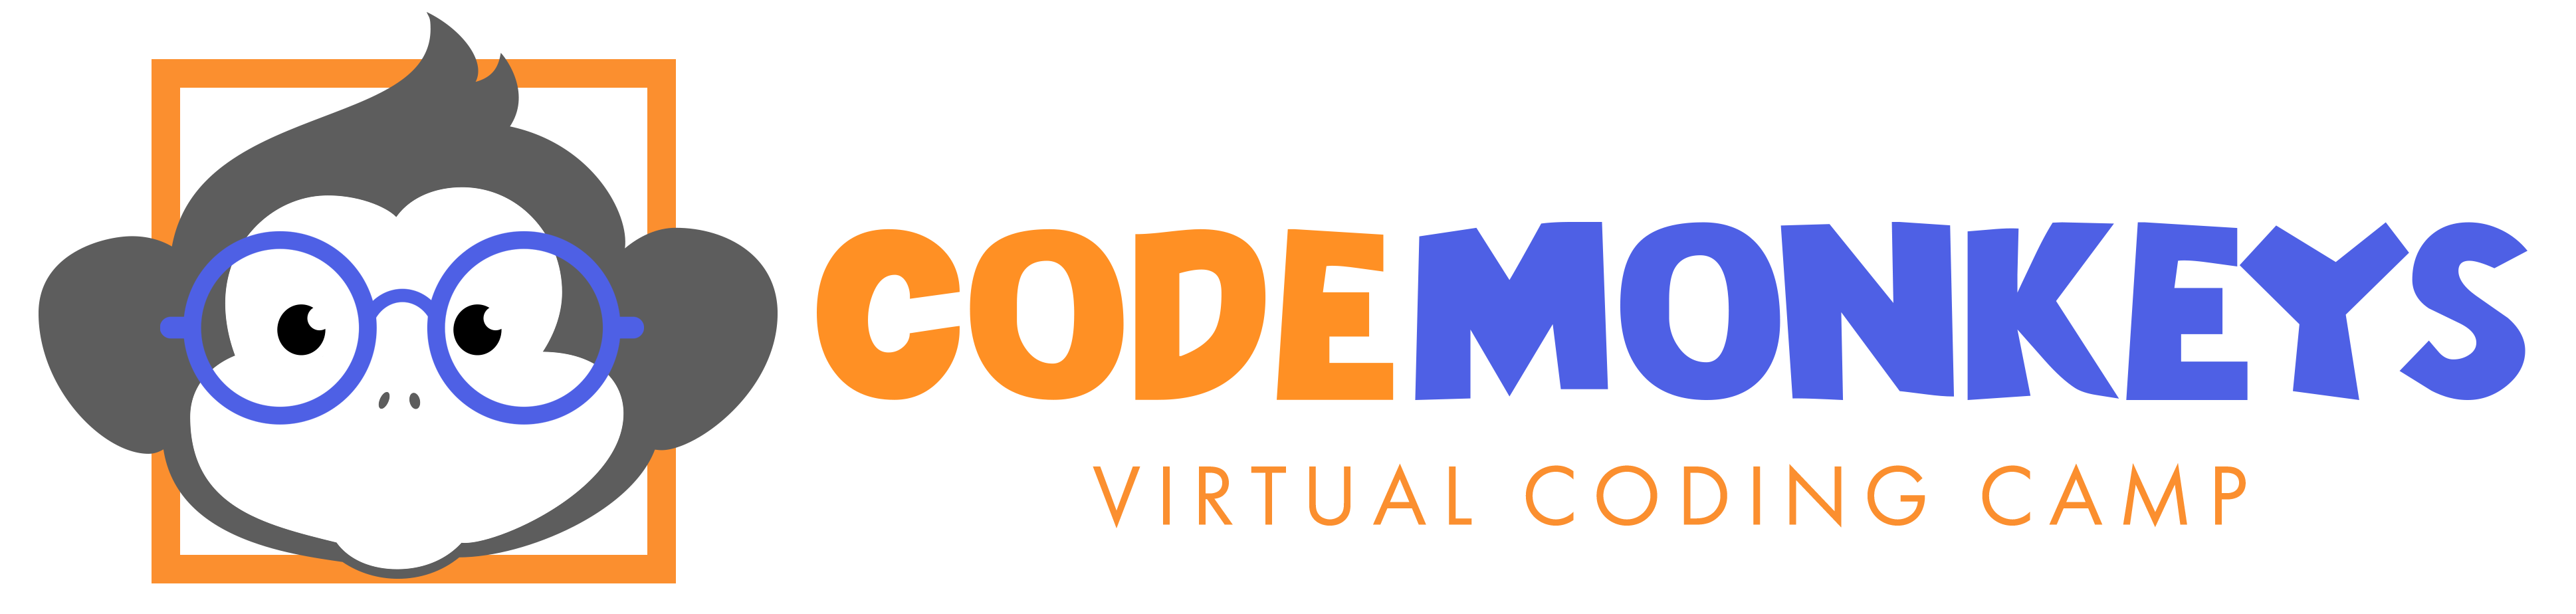 Code Monkey Virtual Training Camp